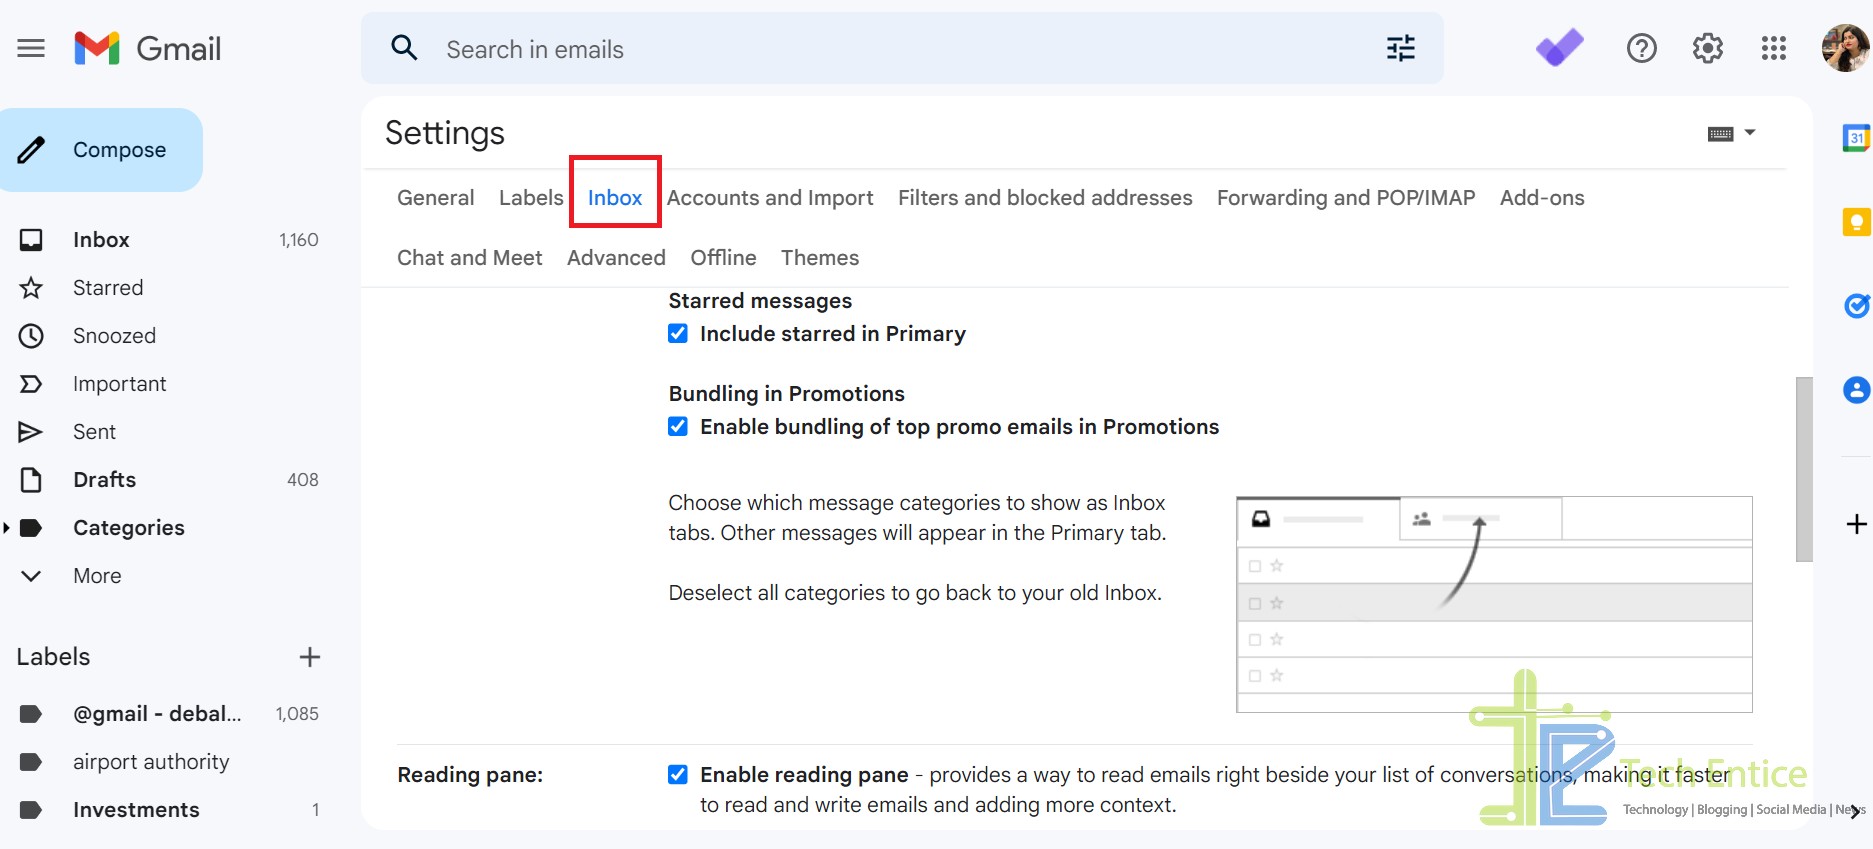 inbox settings gmail desktop version